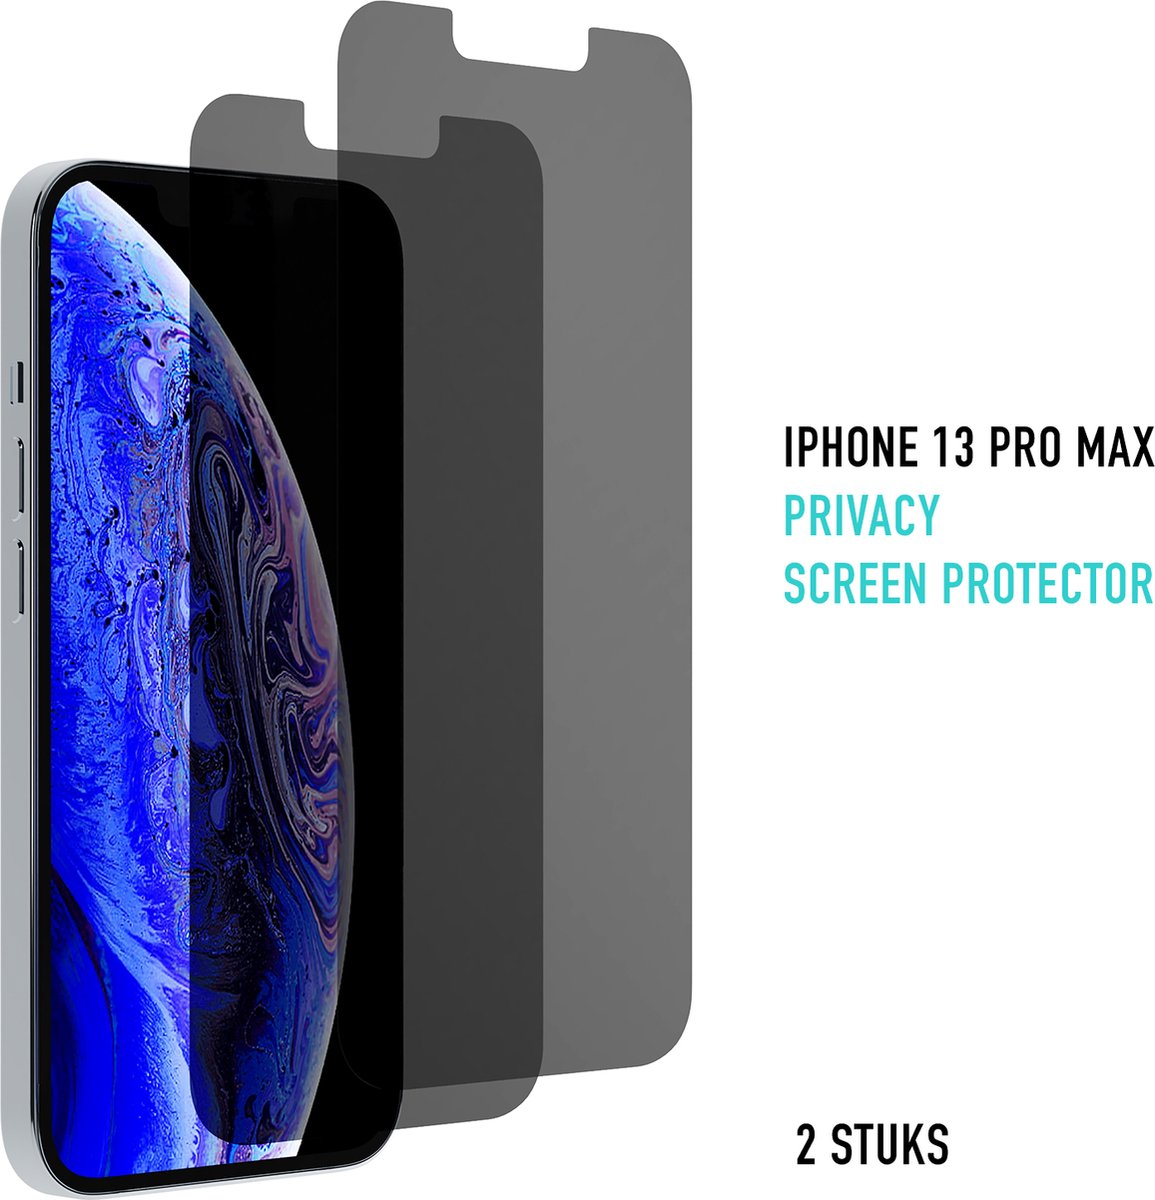 Spy-fy Privacy Screenprotector iPhone 13 Pro Max met Privacy Filter | Two-pack privacy screens | Met installatiekit | Privacy Screen voor iPhone | Brievenbus geleverd